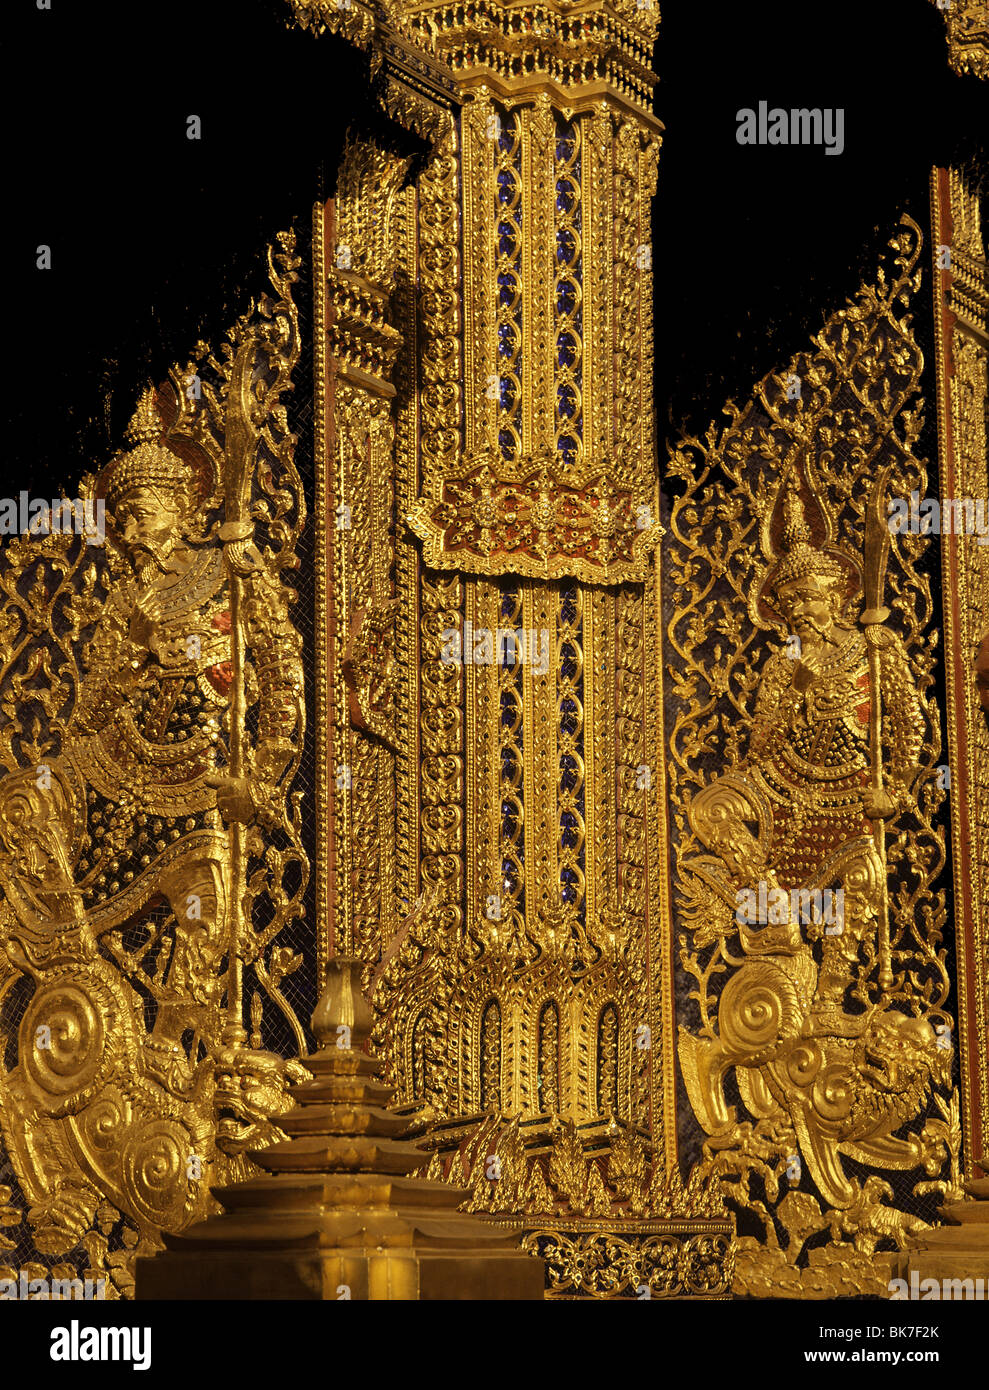 Sus puertas ornamentadas de Wat Rajabopitr, Bangkok, Tailandia, el sudeste de Asia, Asia Foto de stock